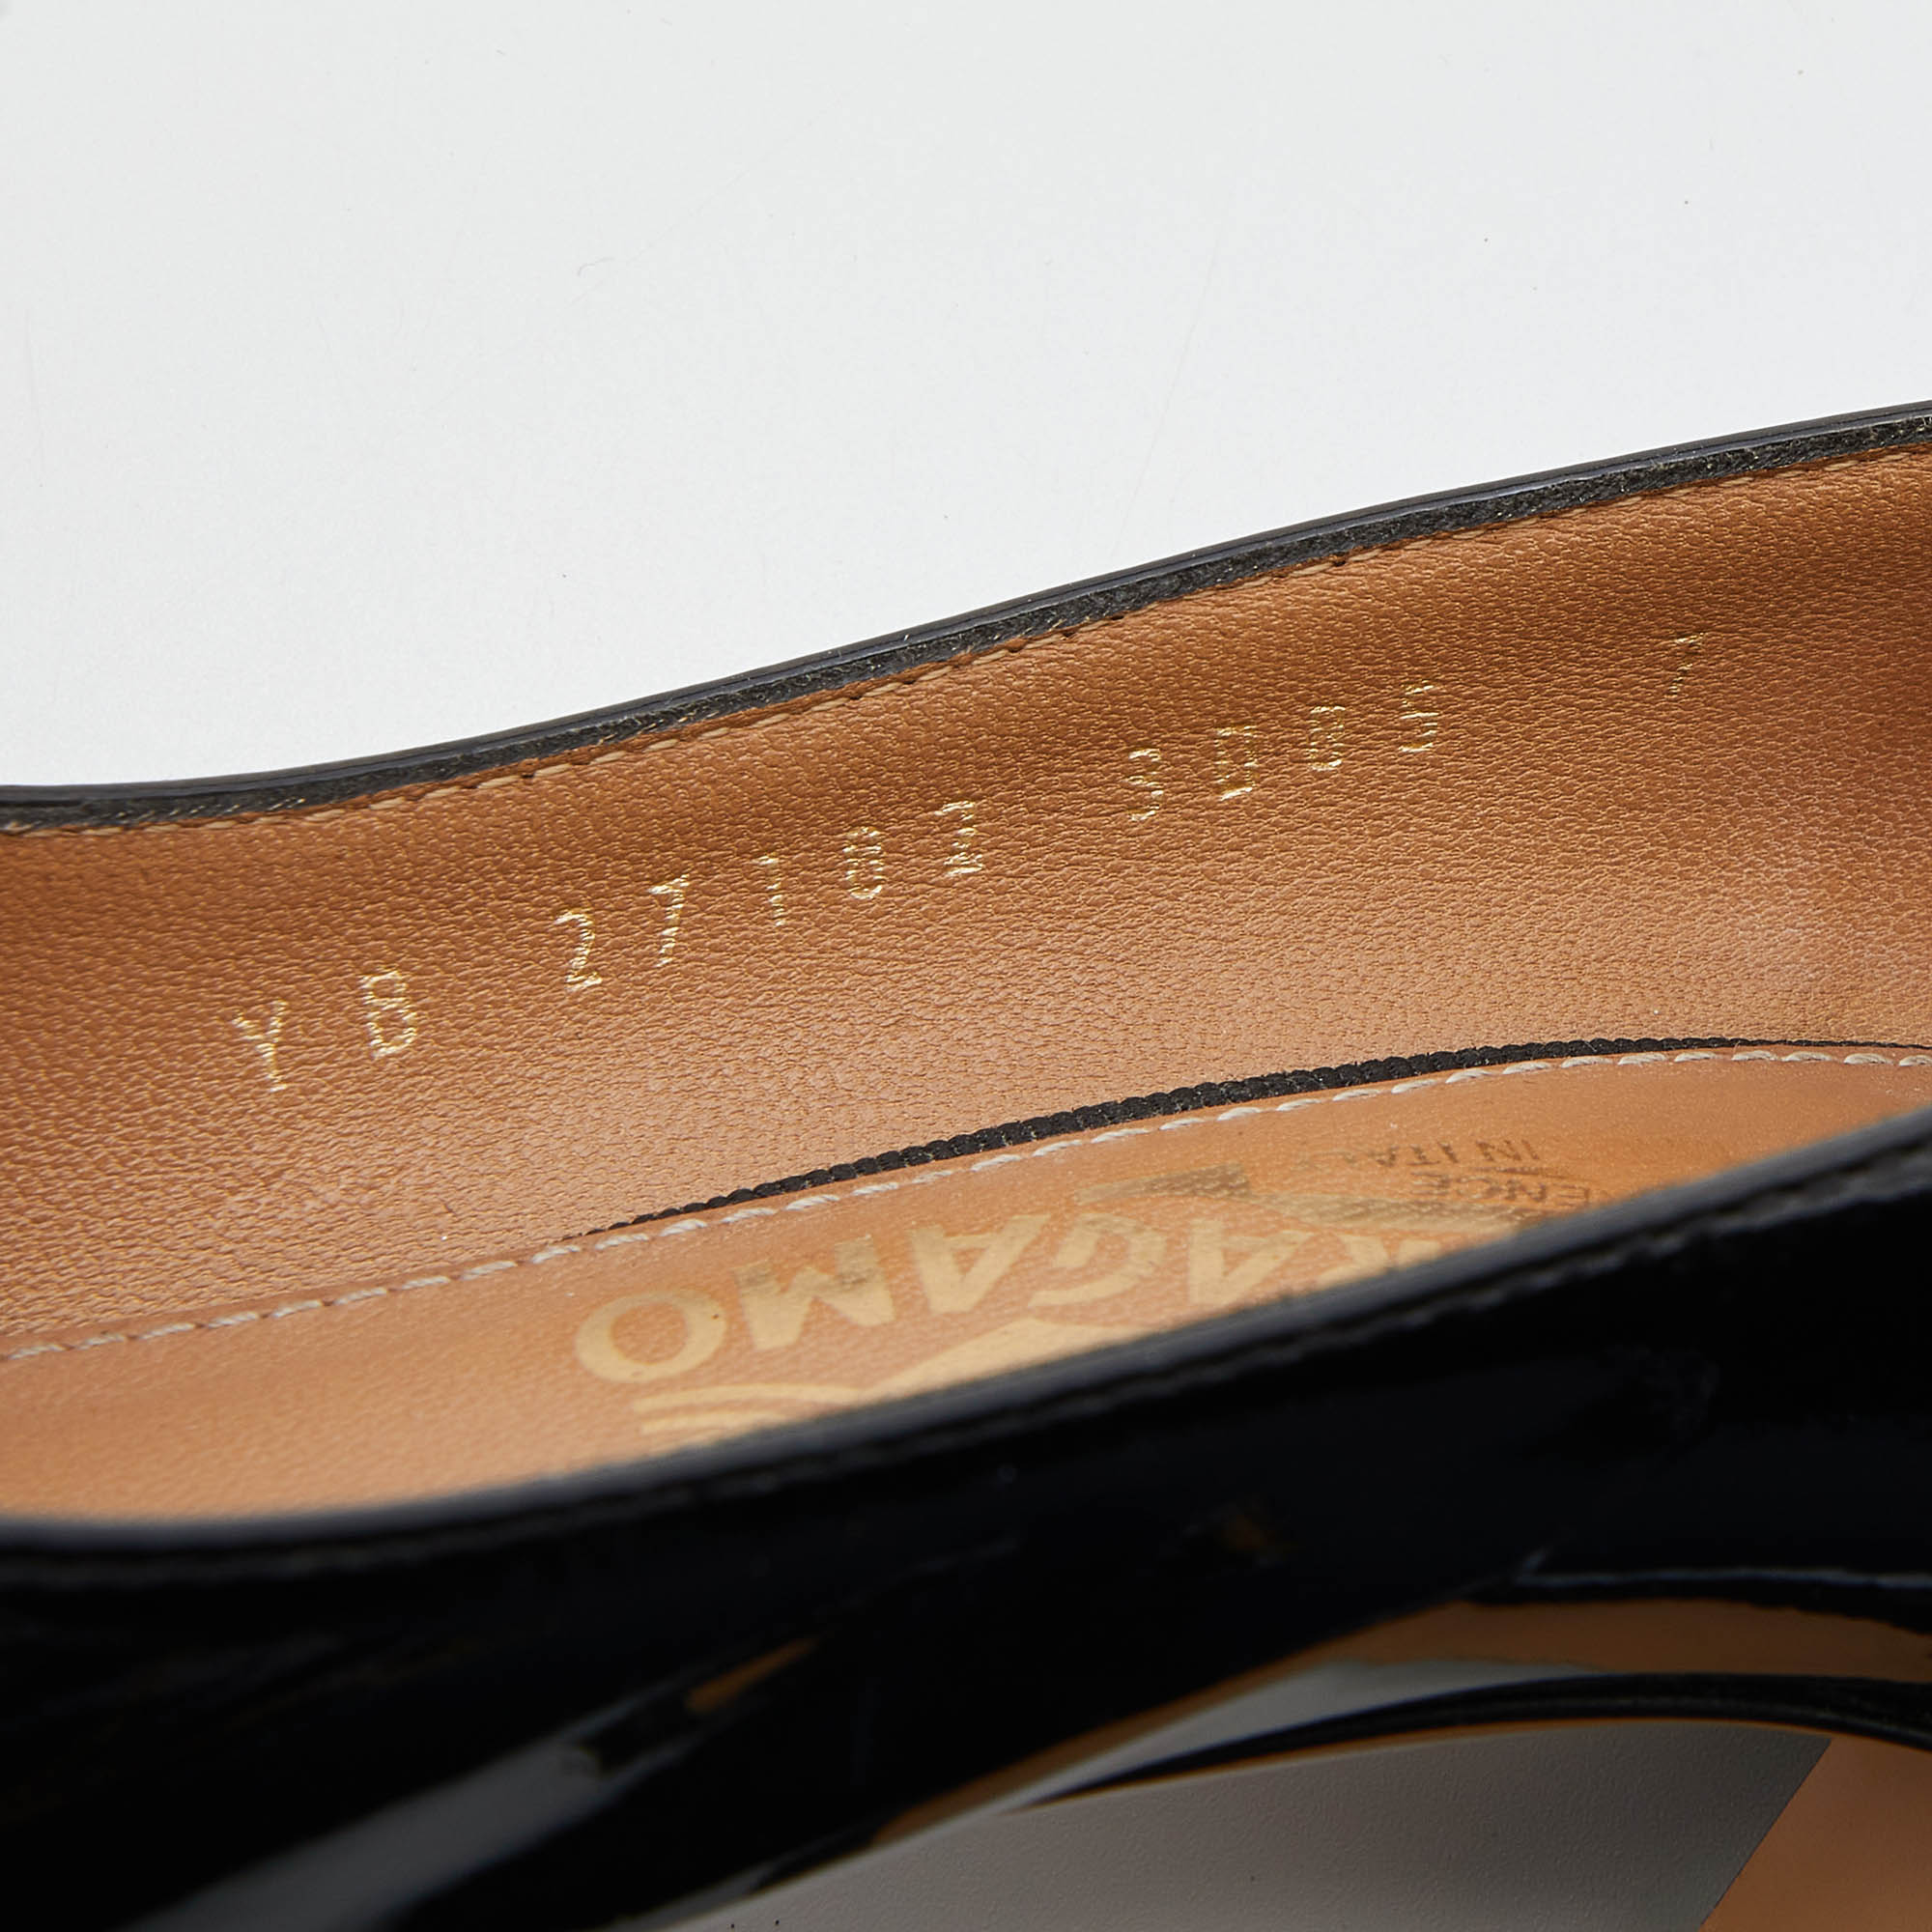 Salvatore Ferragamo Black Patent Leather Block Heel Pumps Size 37.5